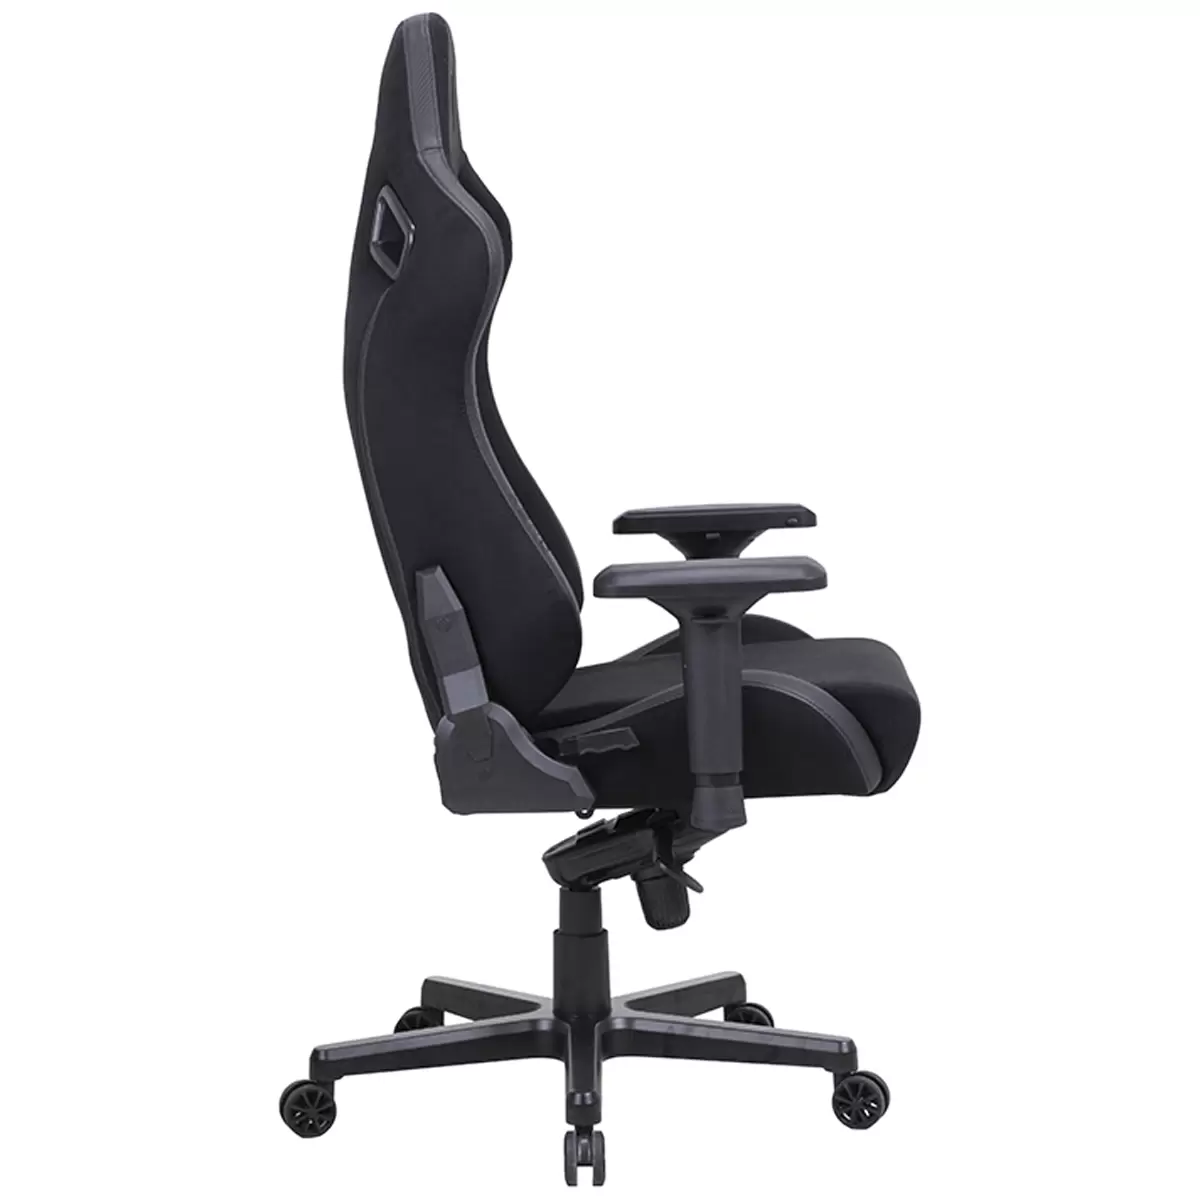 Aerocool Onex EV12 Evolution Edition Gaming Chair - Suede Blue